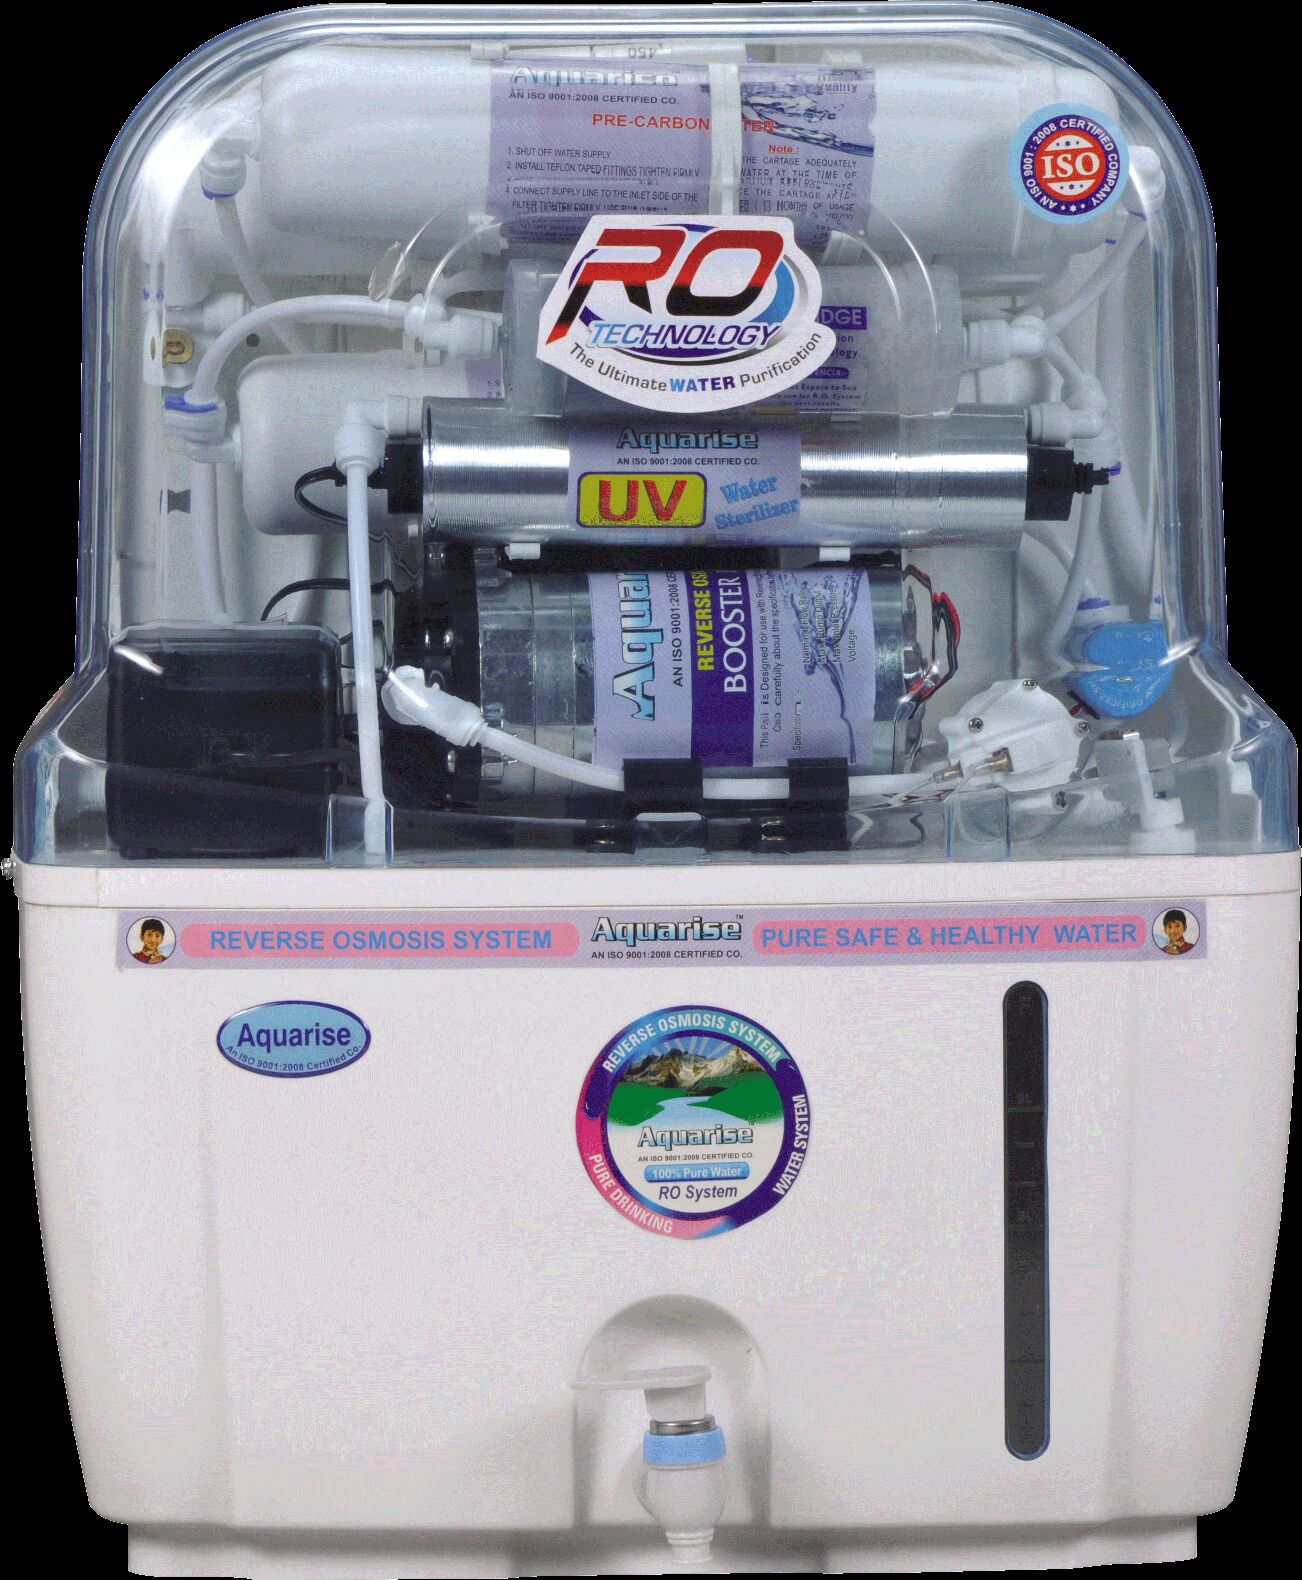 Aqua RO Water Purifier Repair Services DelhiServicesEverything ElseEast DelhiOthers